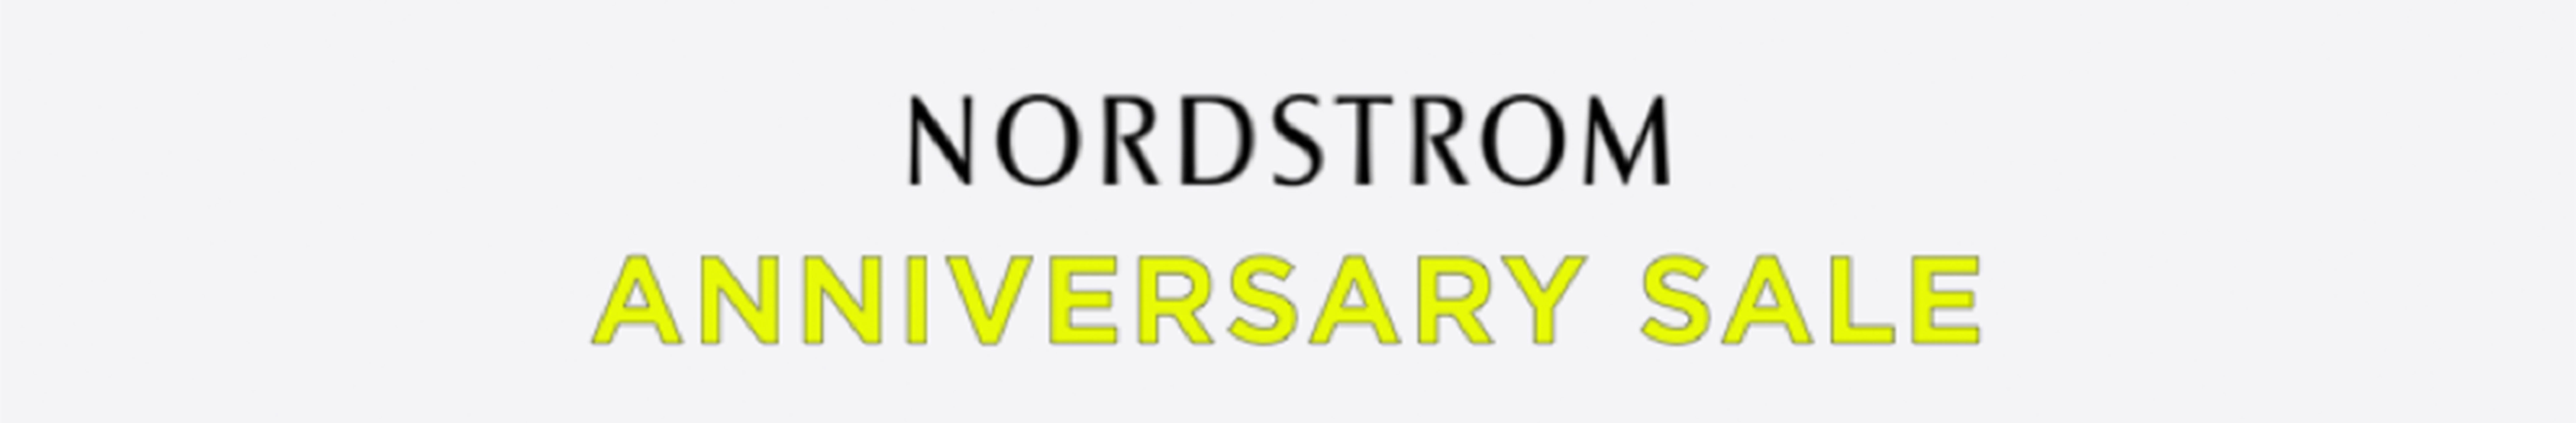 nordstrom Anniversary sale 2017